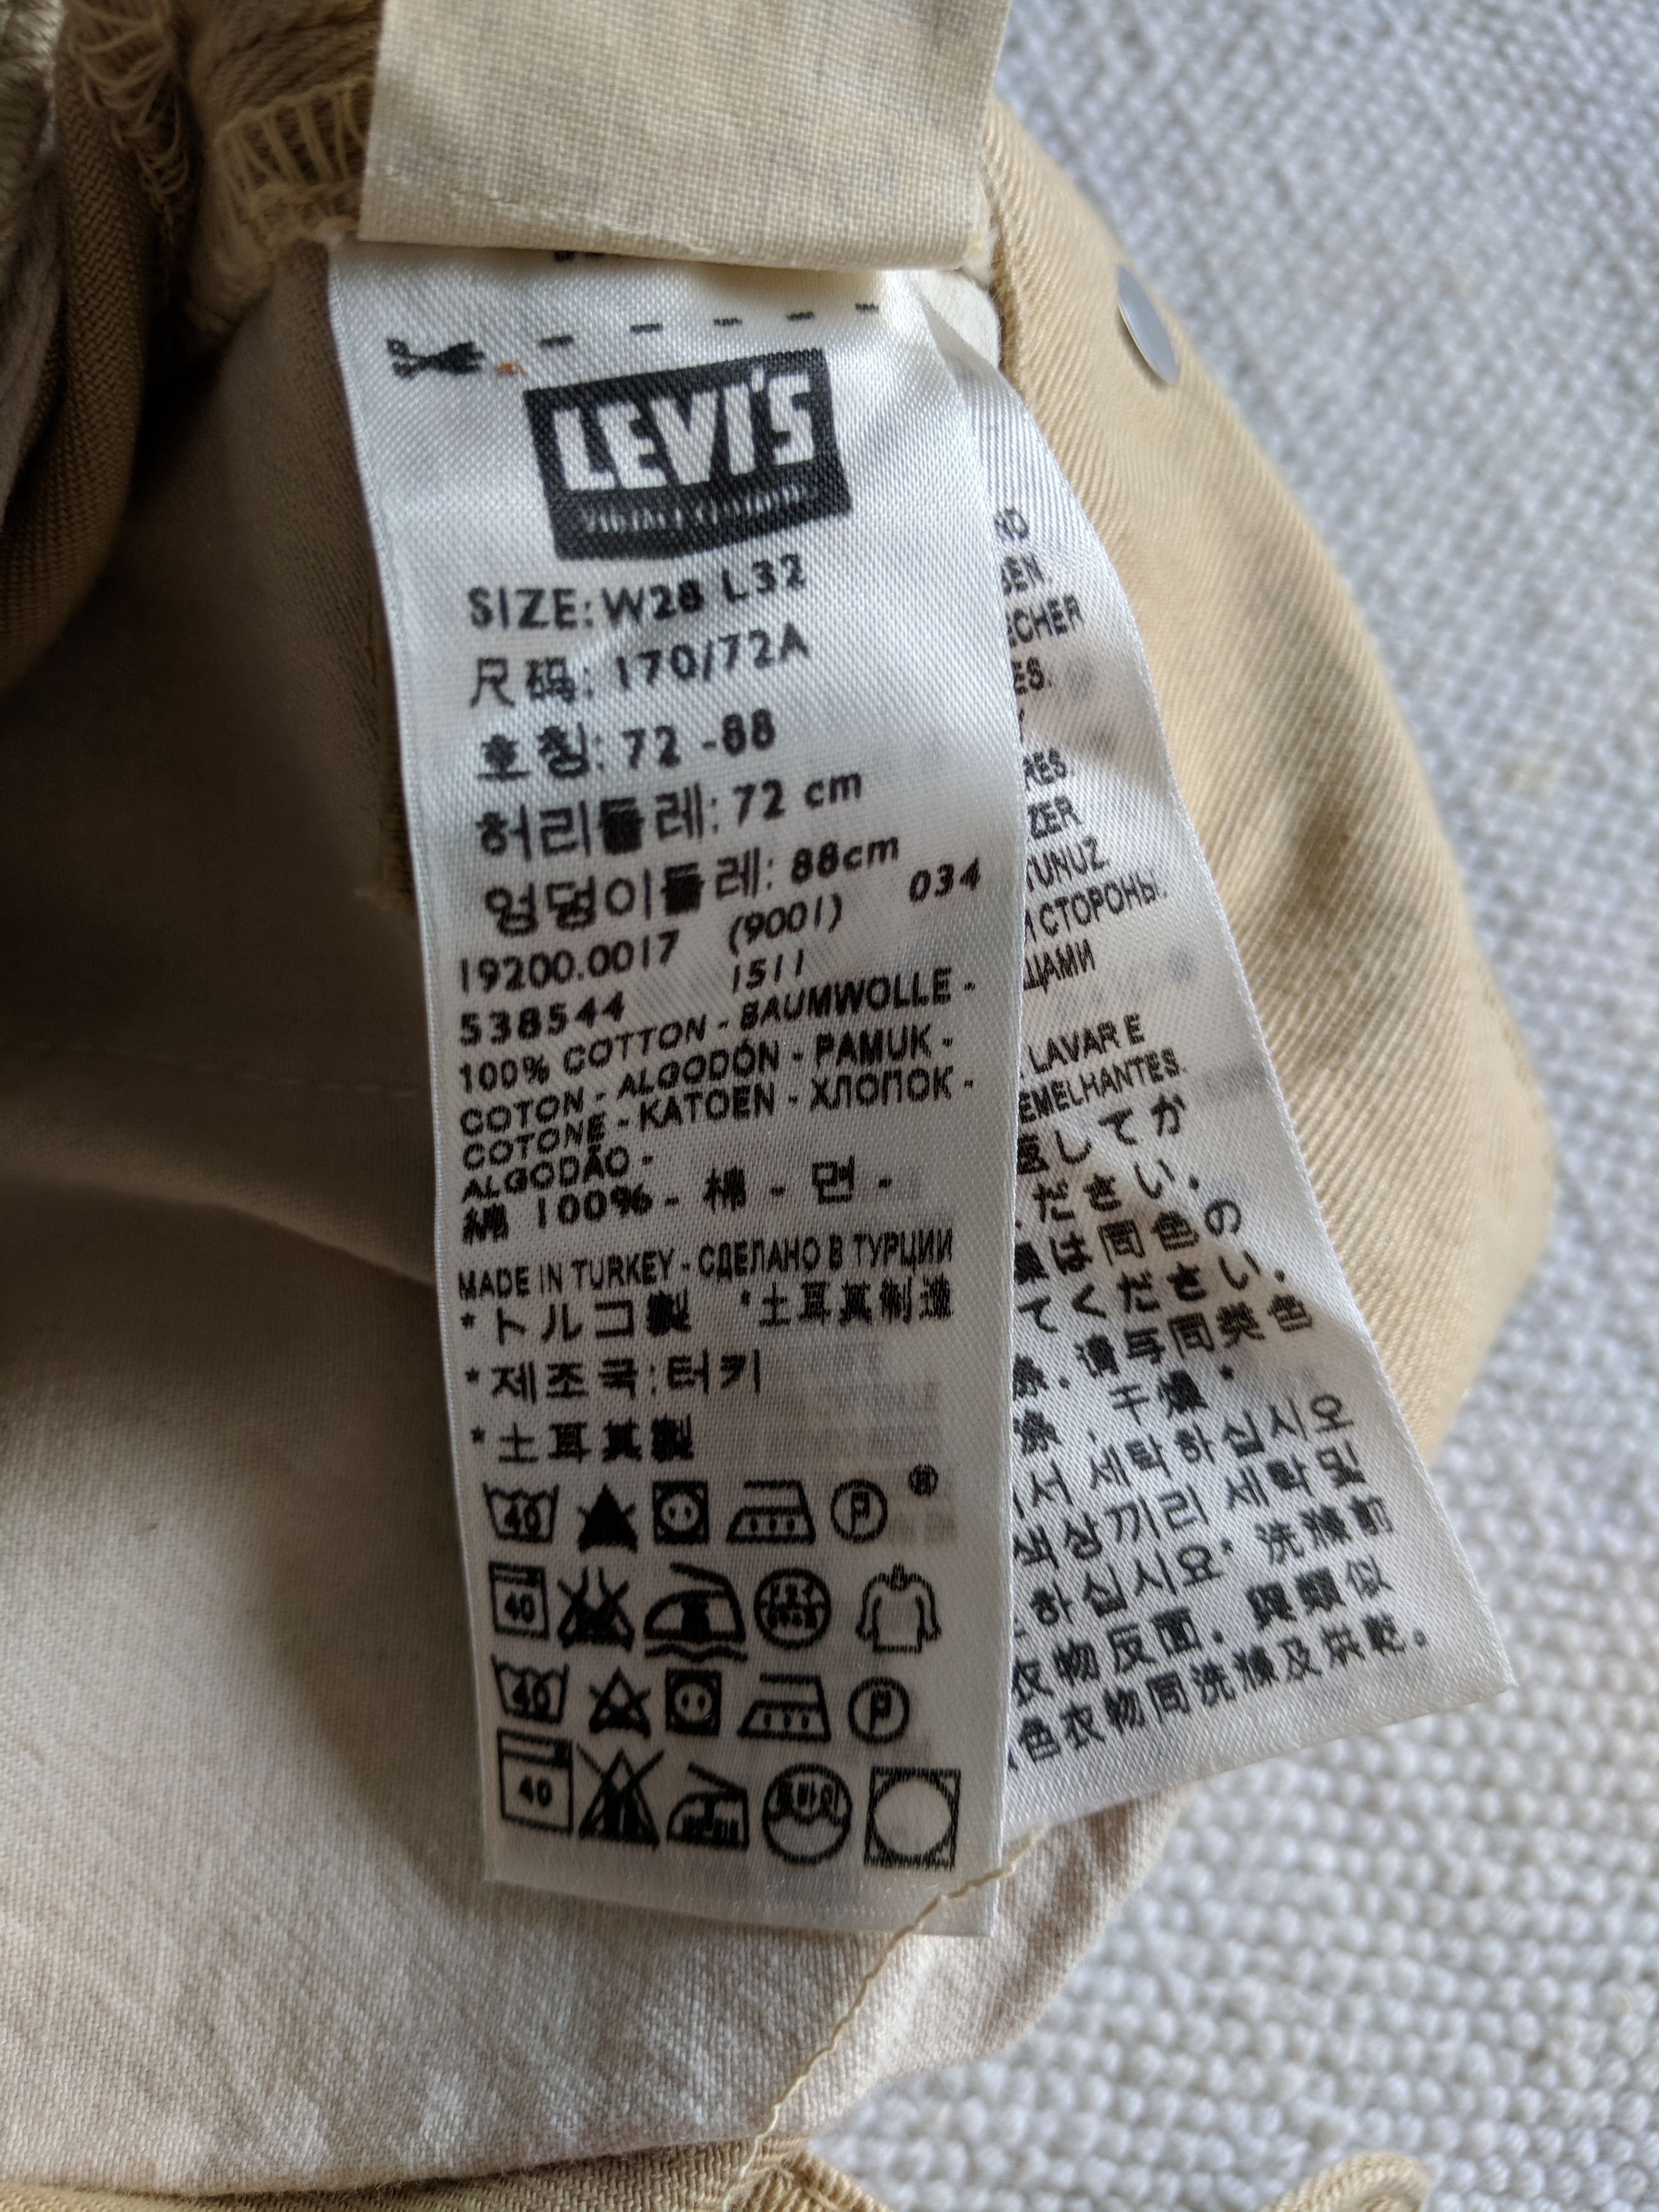 Levi's Levis LVC vintage clothing San Francisco deadstock khakis chino 1920s style pants size 29 30 Size US 29 - 12 Thumbnail